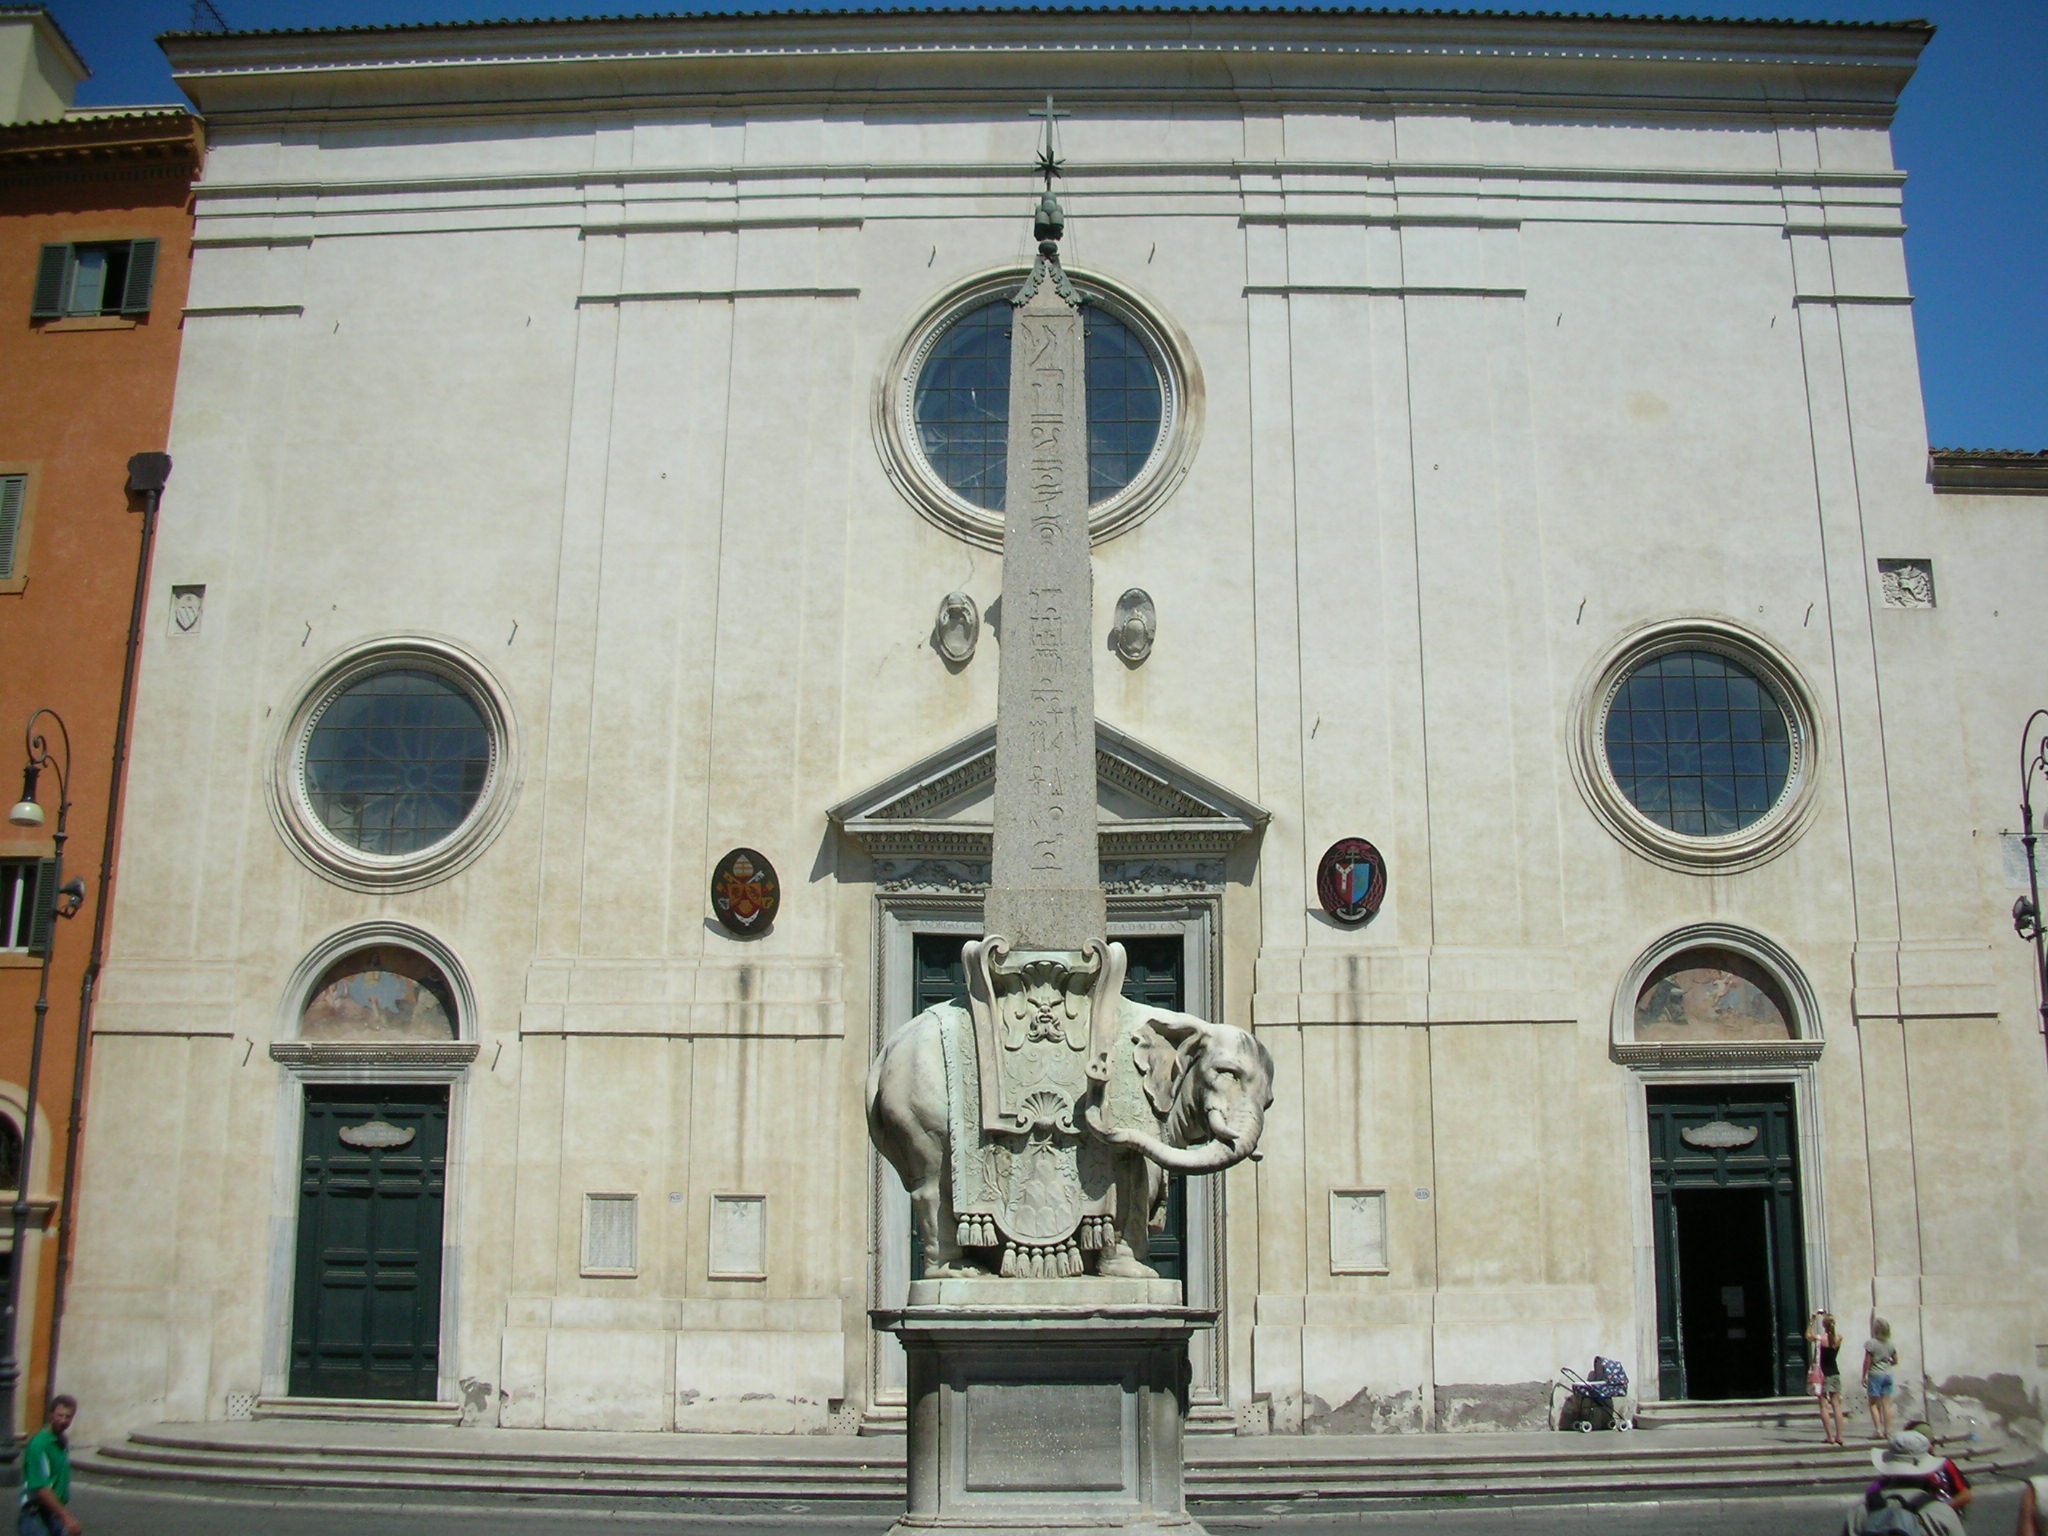 Façade of Santa Maria sopra Minerva